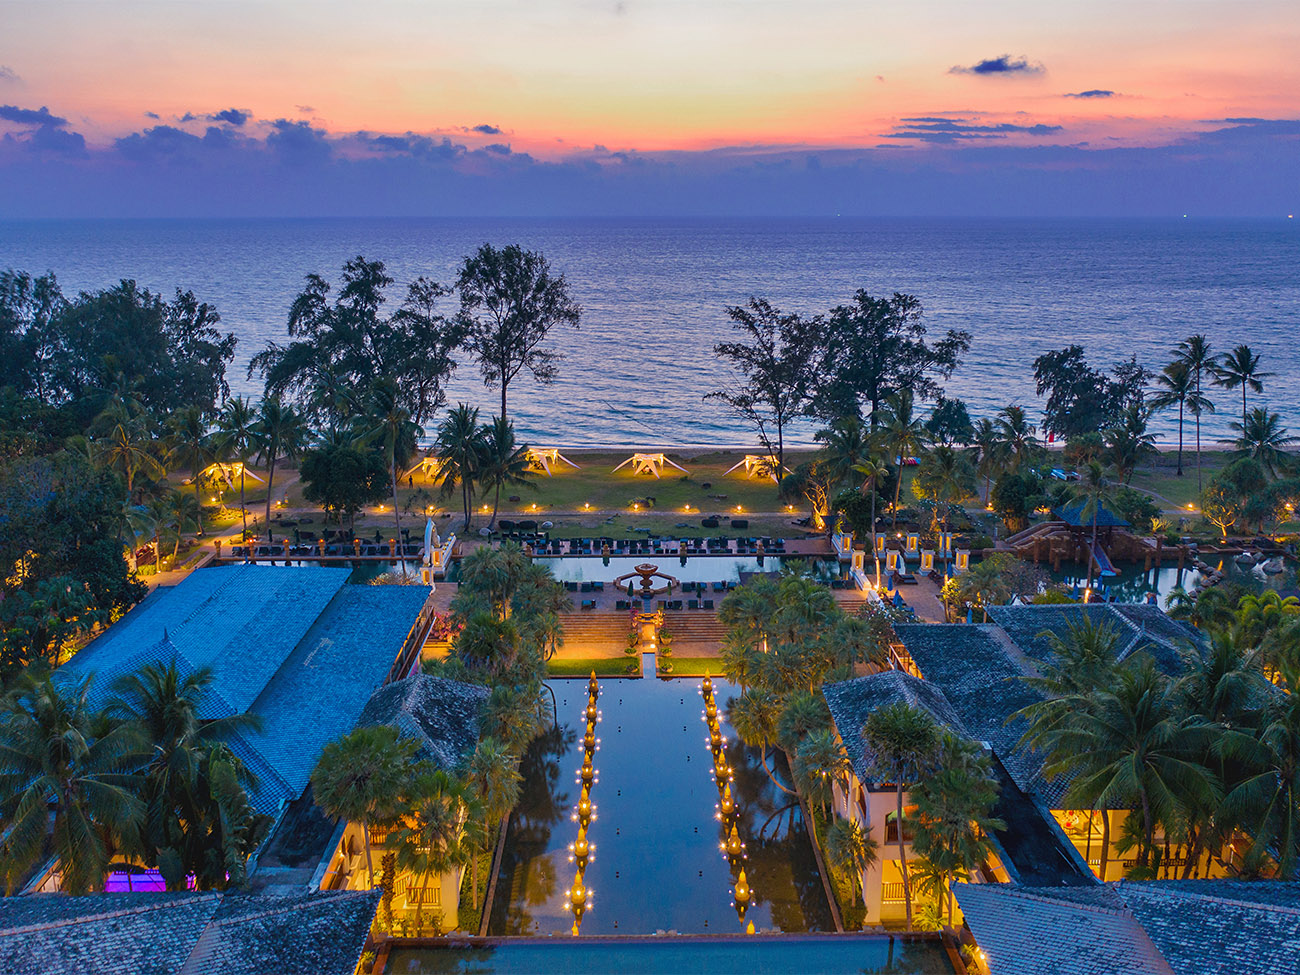 Image of Marriott's Phuket Beach Club in Mai Khao Beach.